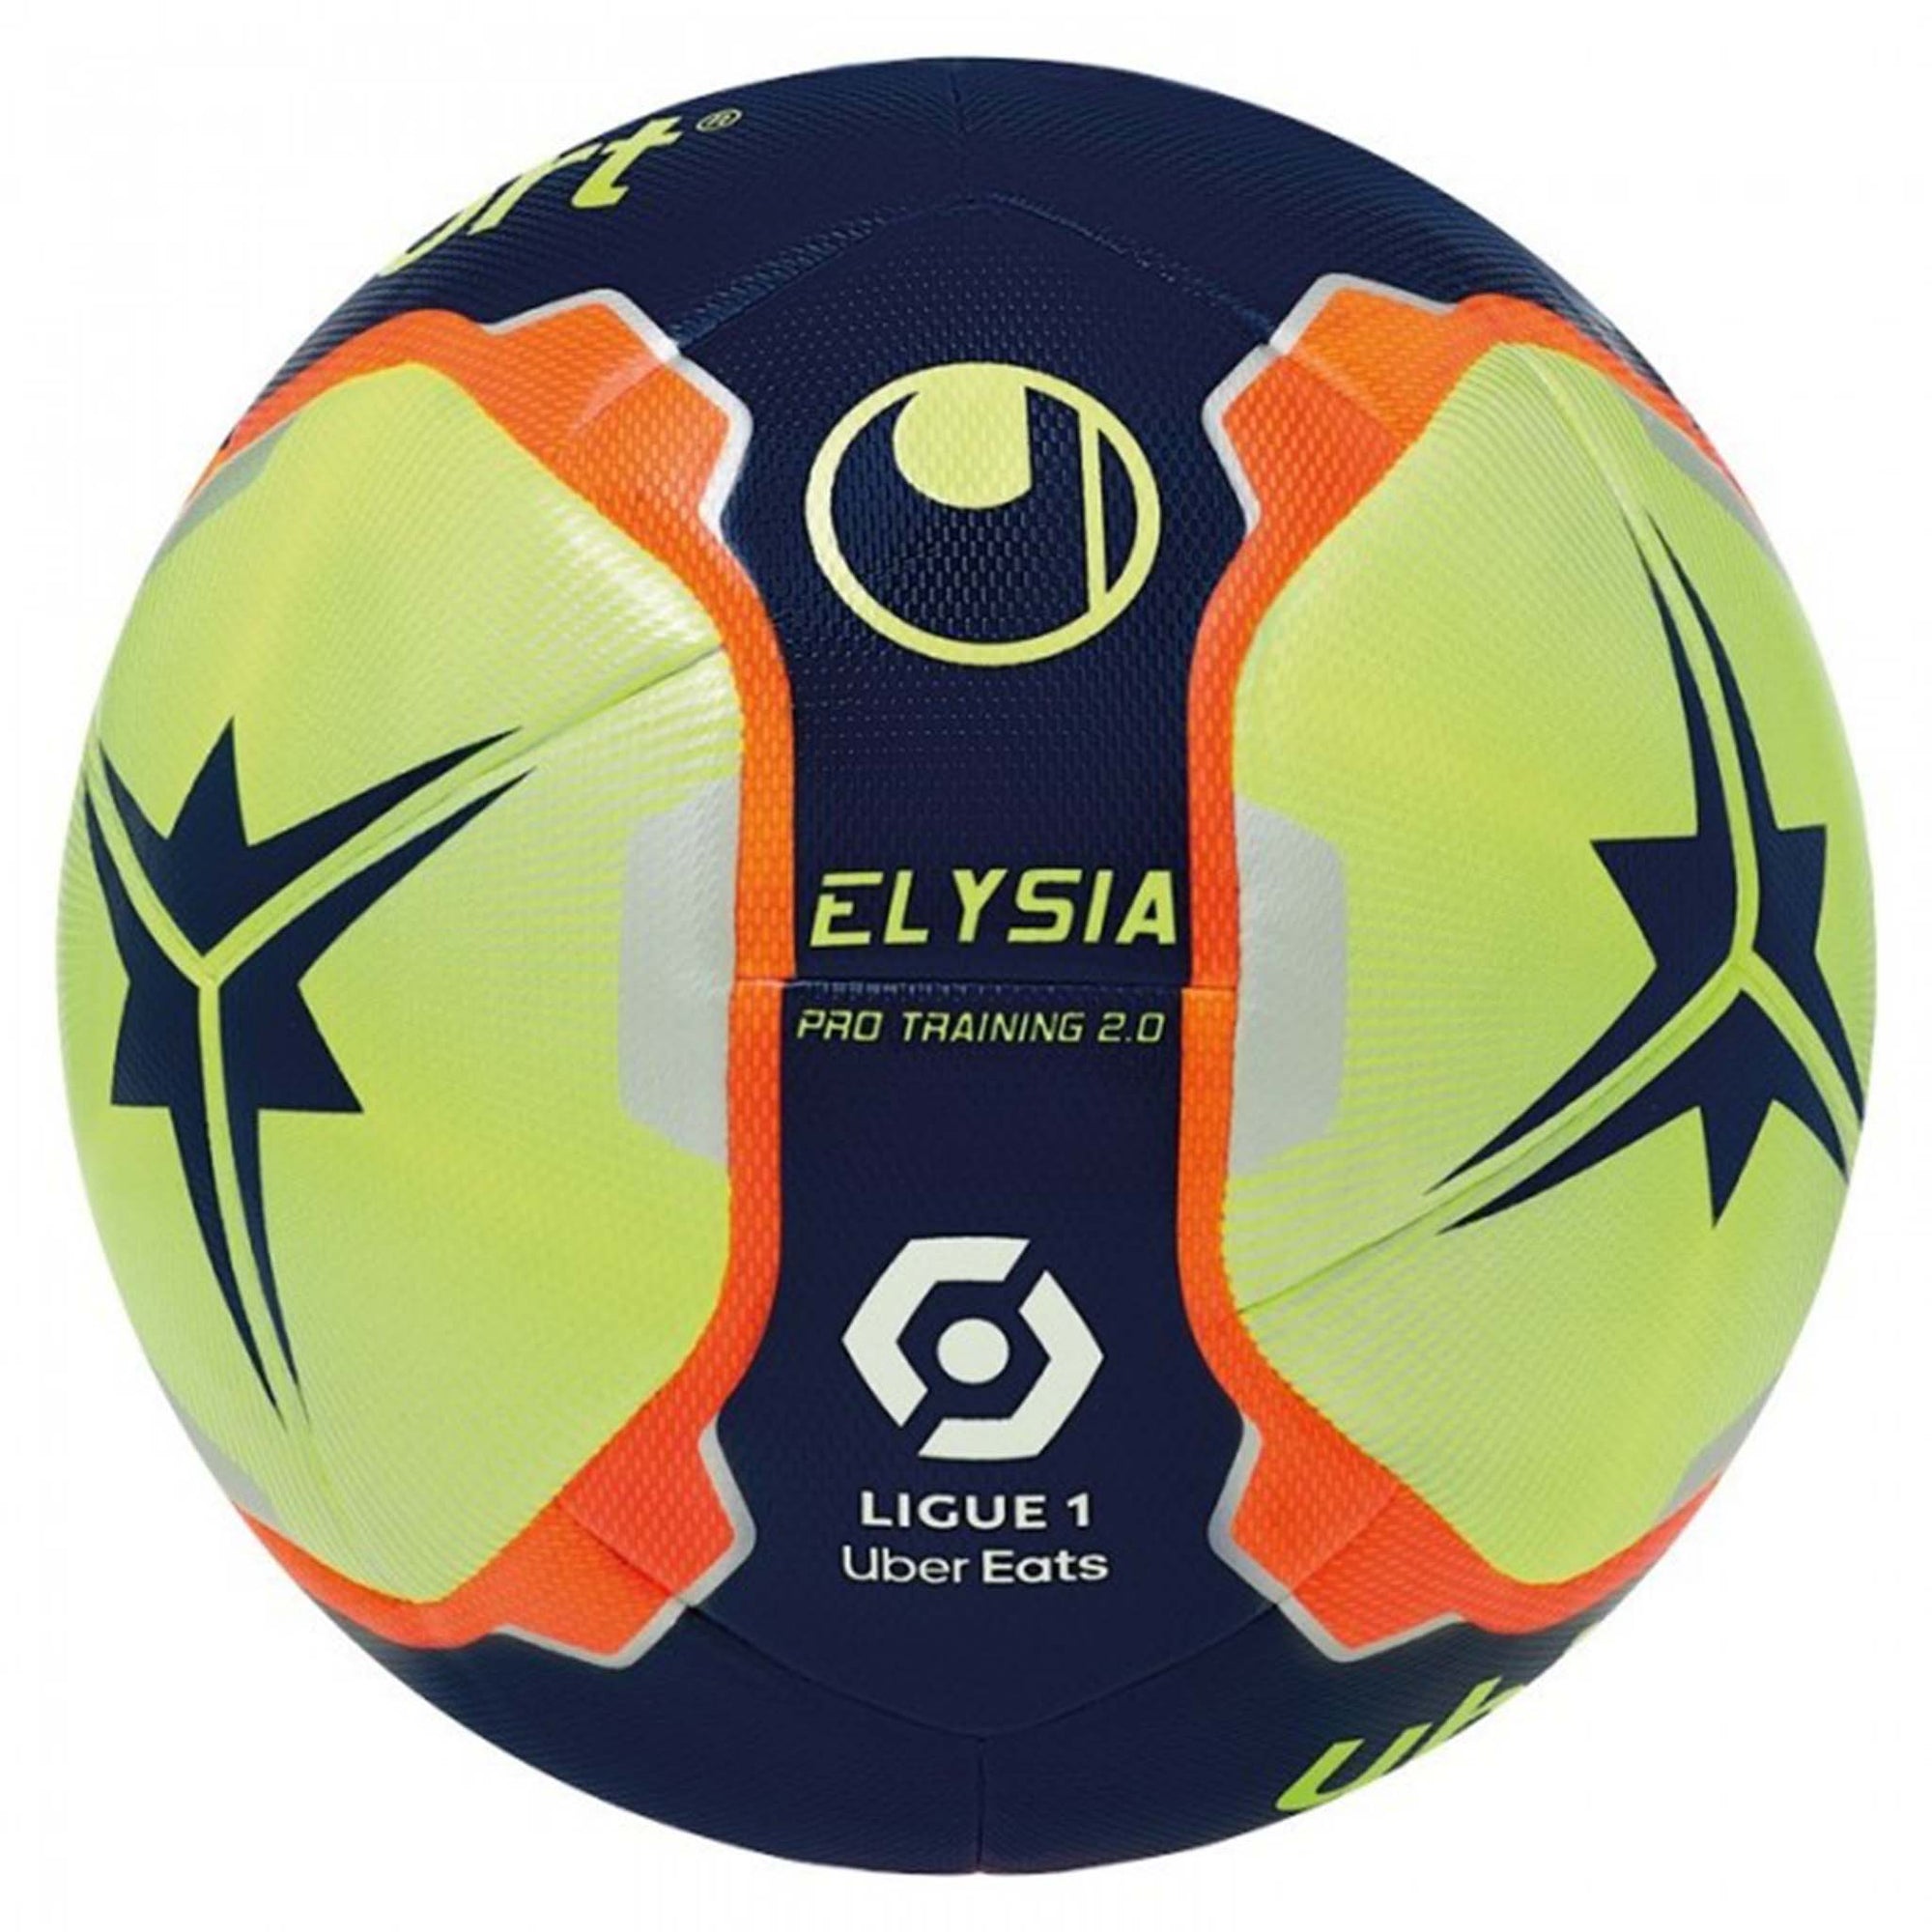 Uhlsport Elysia Pro Training 2.0 ballon de soccer 2021 Ligue 1 Uber Eats